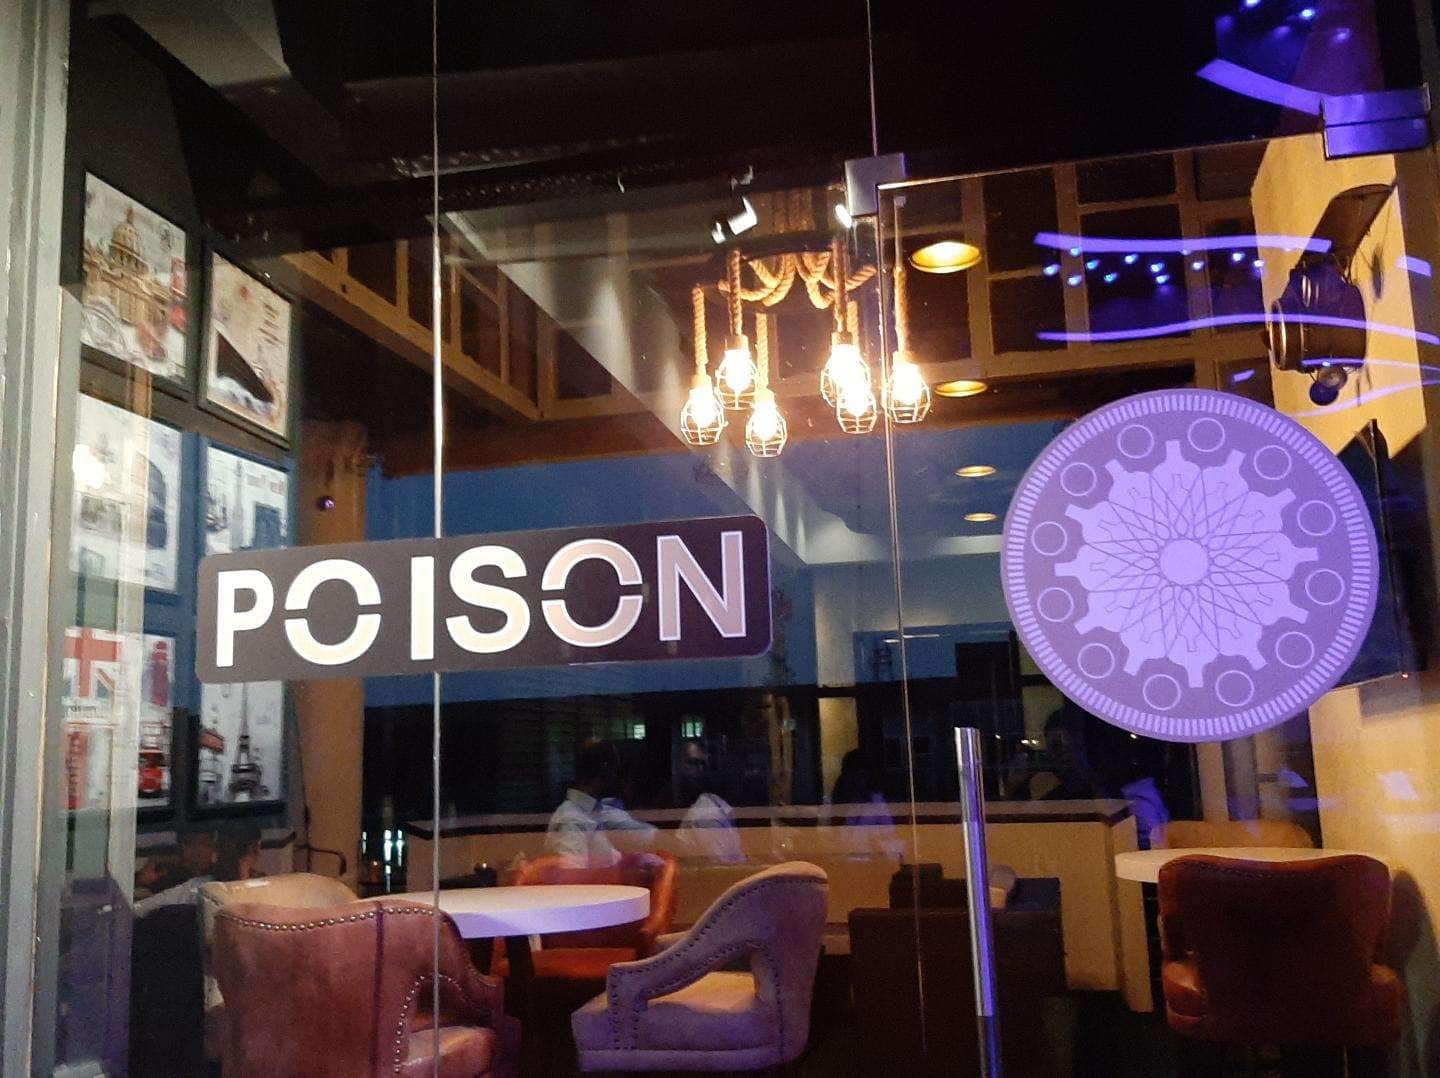 Poison, Sector 17, Chandigarh | Zomato